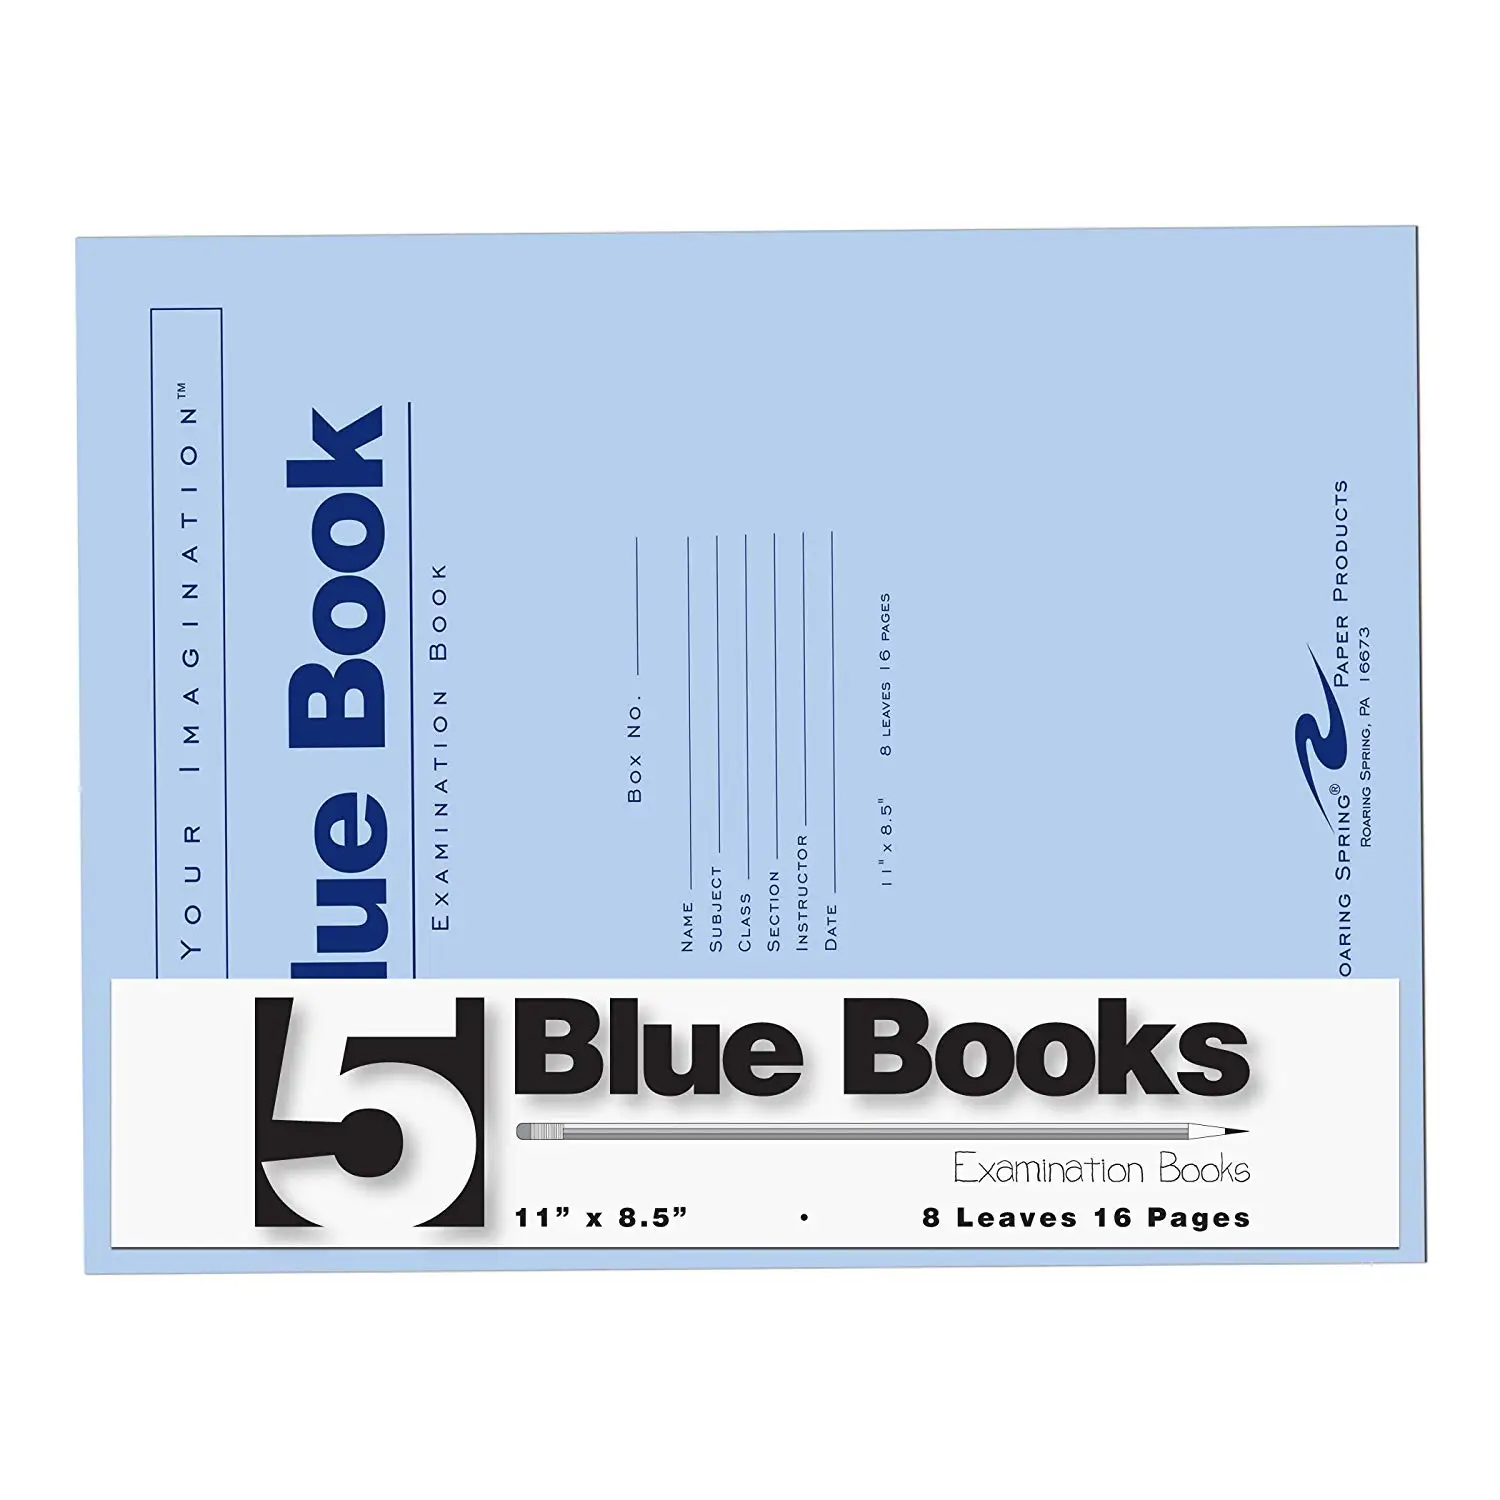 blueharvest grade book